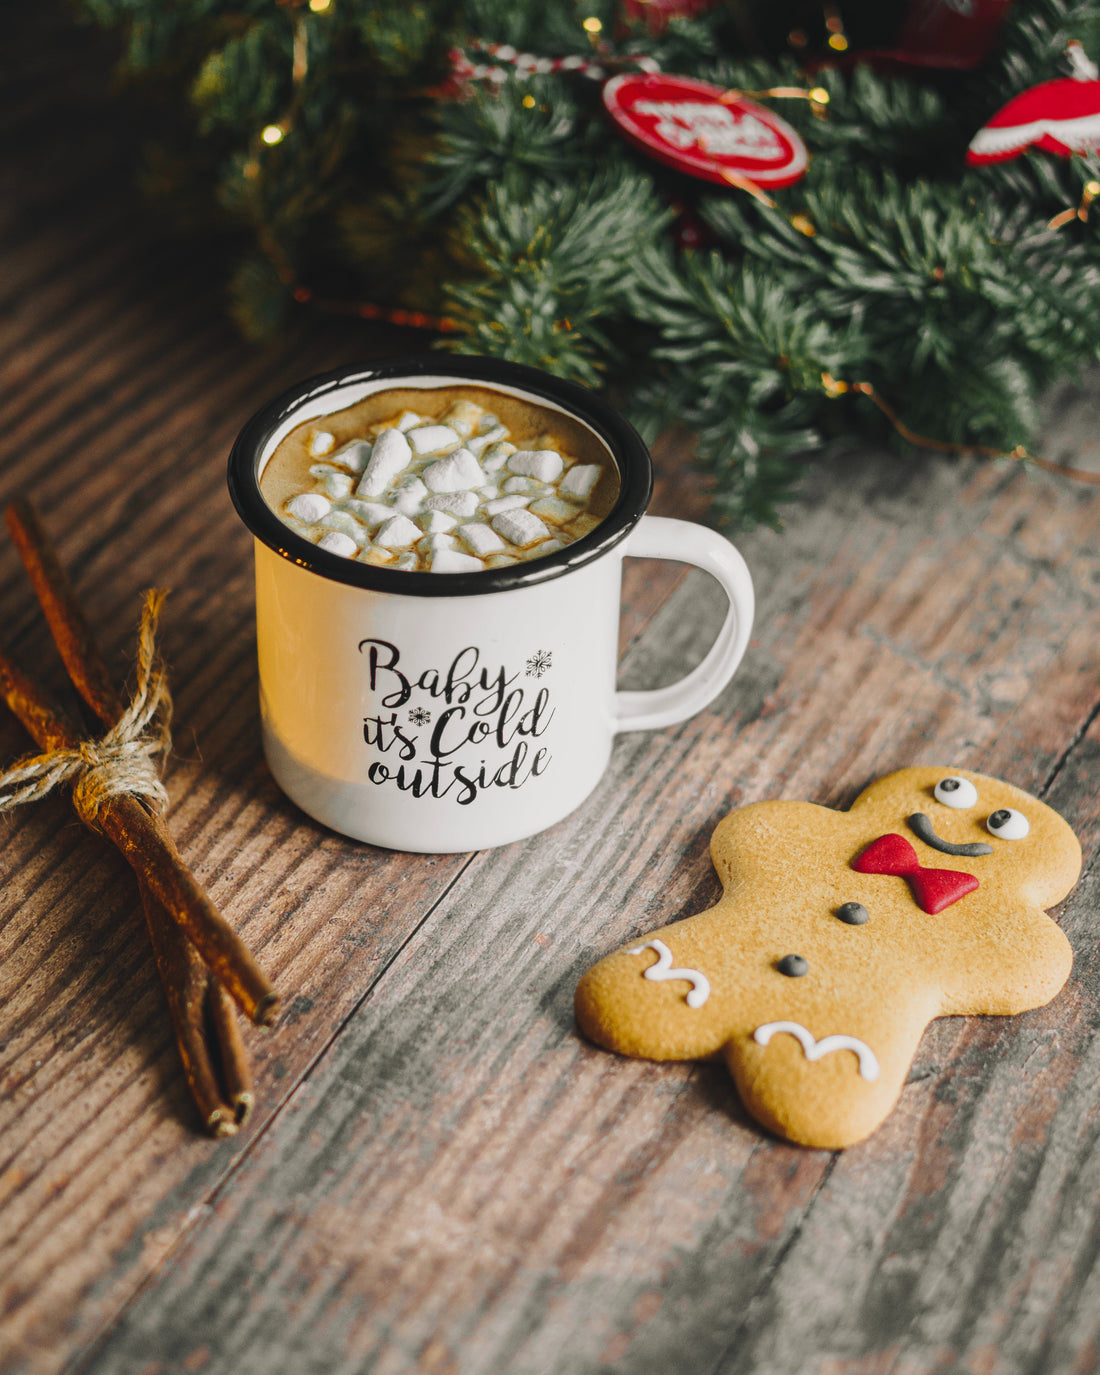 Gingerbread buddy meets his warm winter friend – mug of cocoa awaits a sweet dunking!